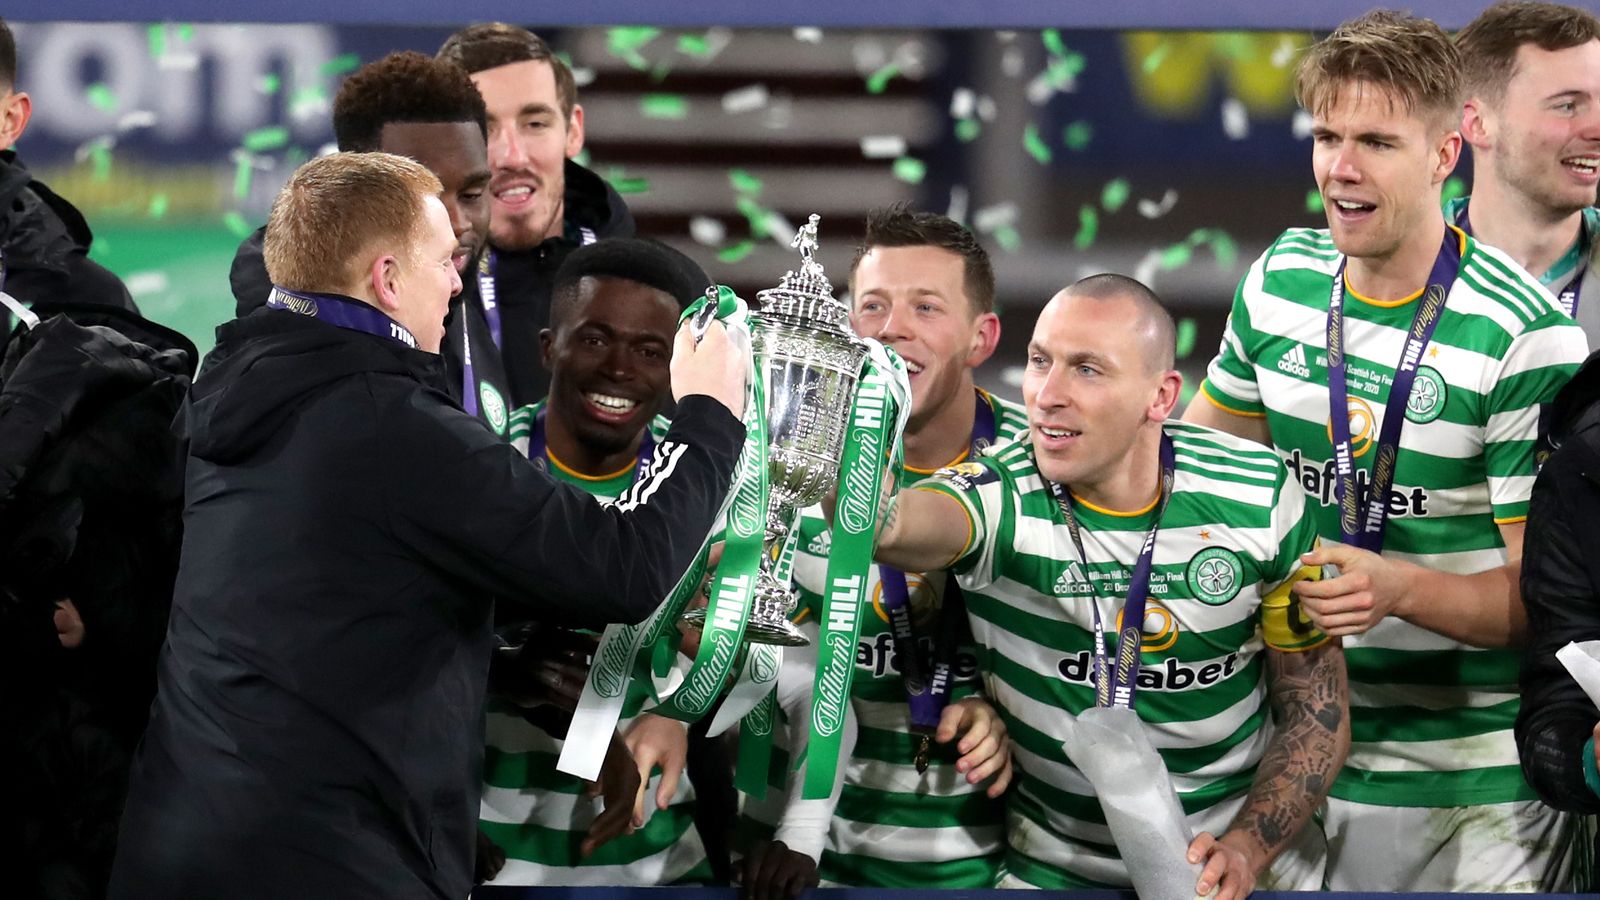 Slideshow: The numbers behind Celtic's unprecedented quadruple treble